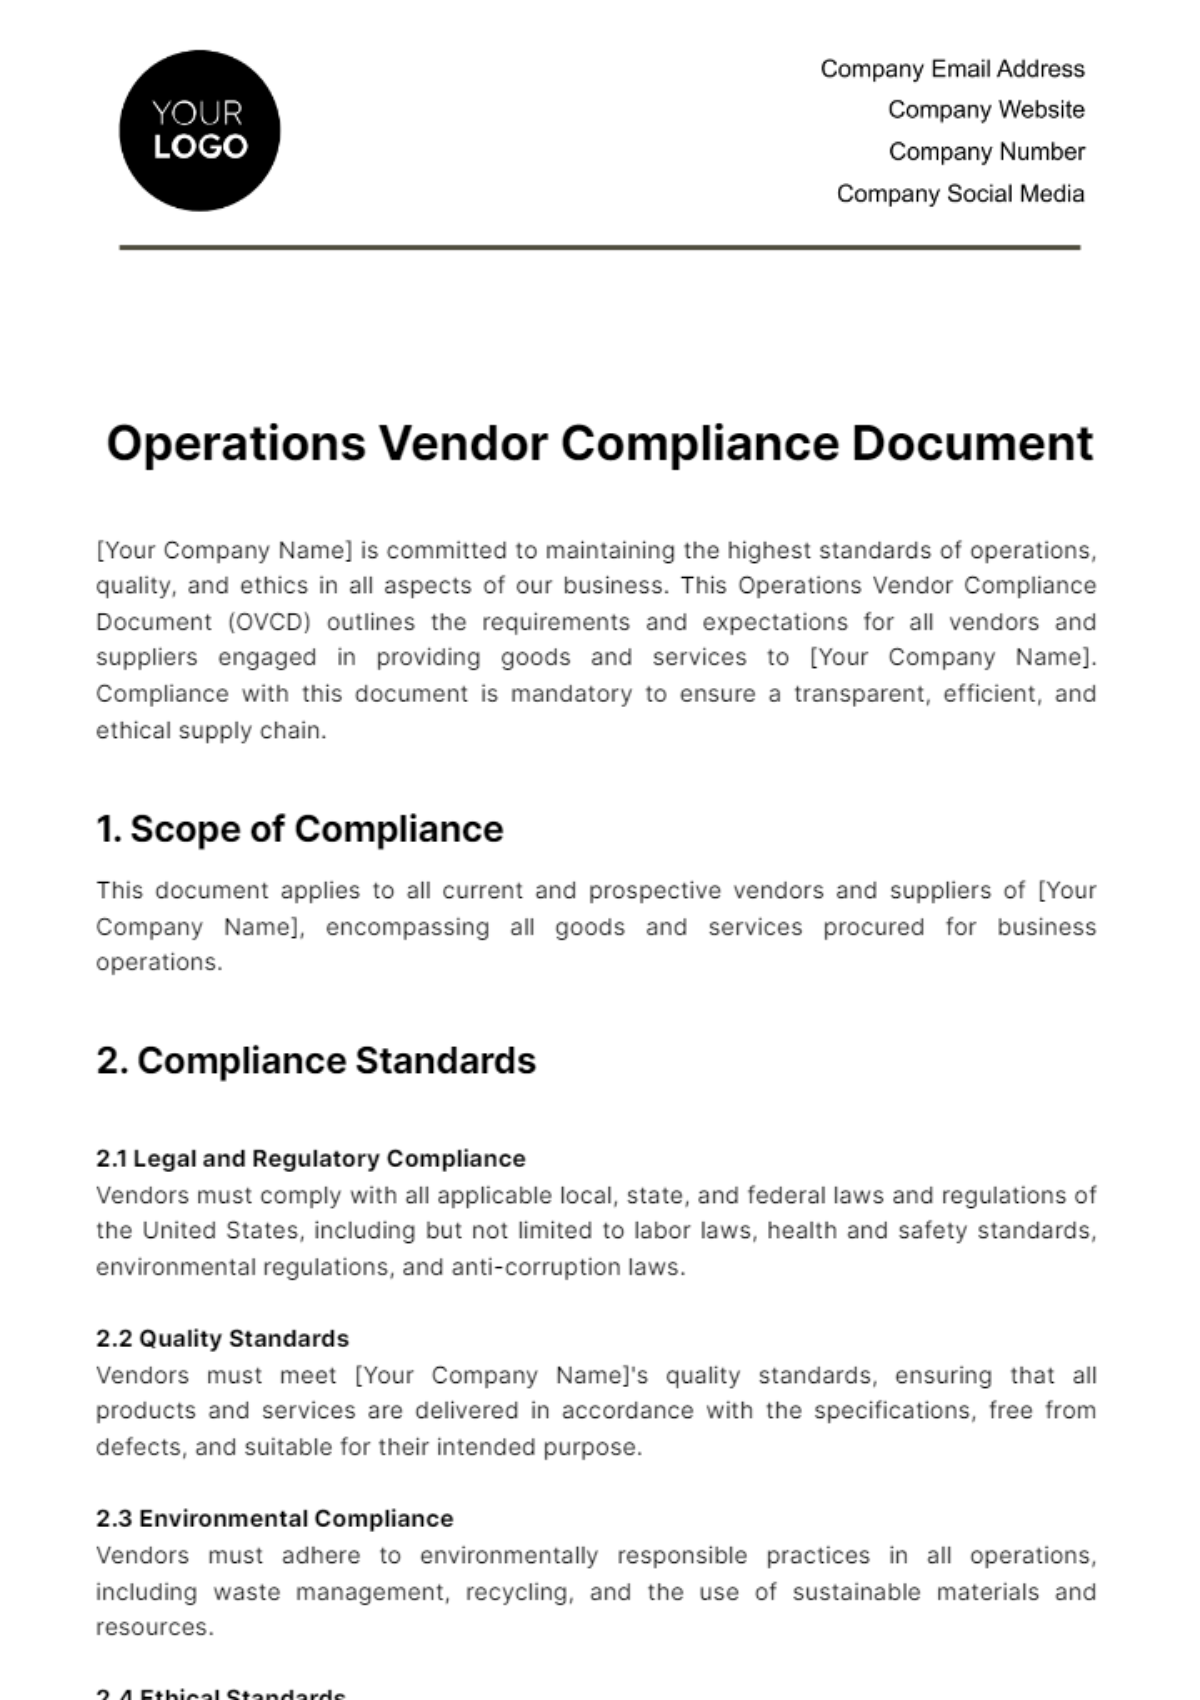 Operations Vendor Compliance Document Template